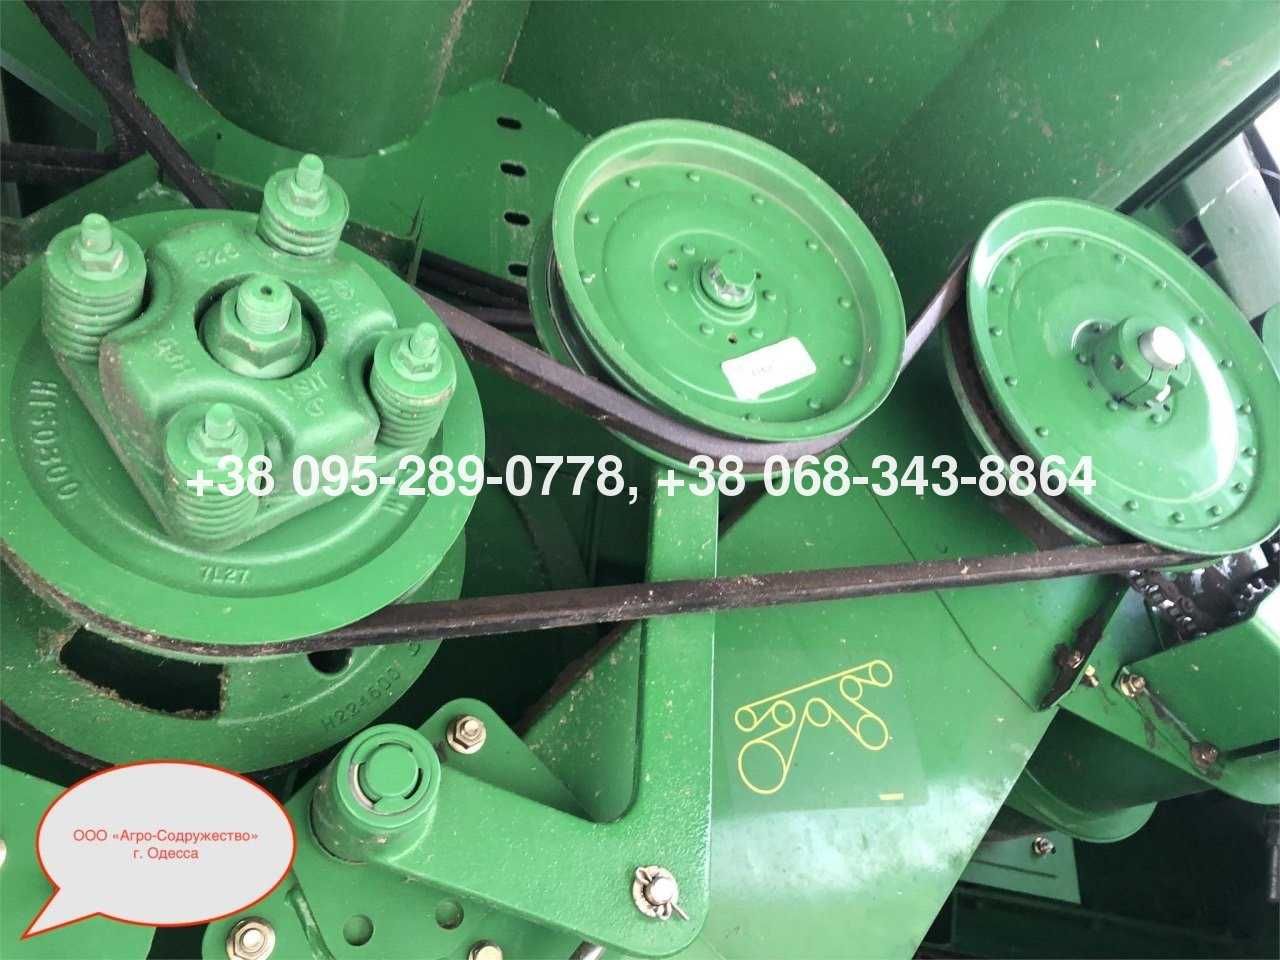 Услуги по уборке зерновых культур Комбайн Bullet Rotor John Deere 9670